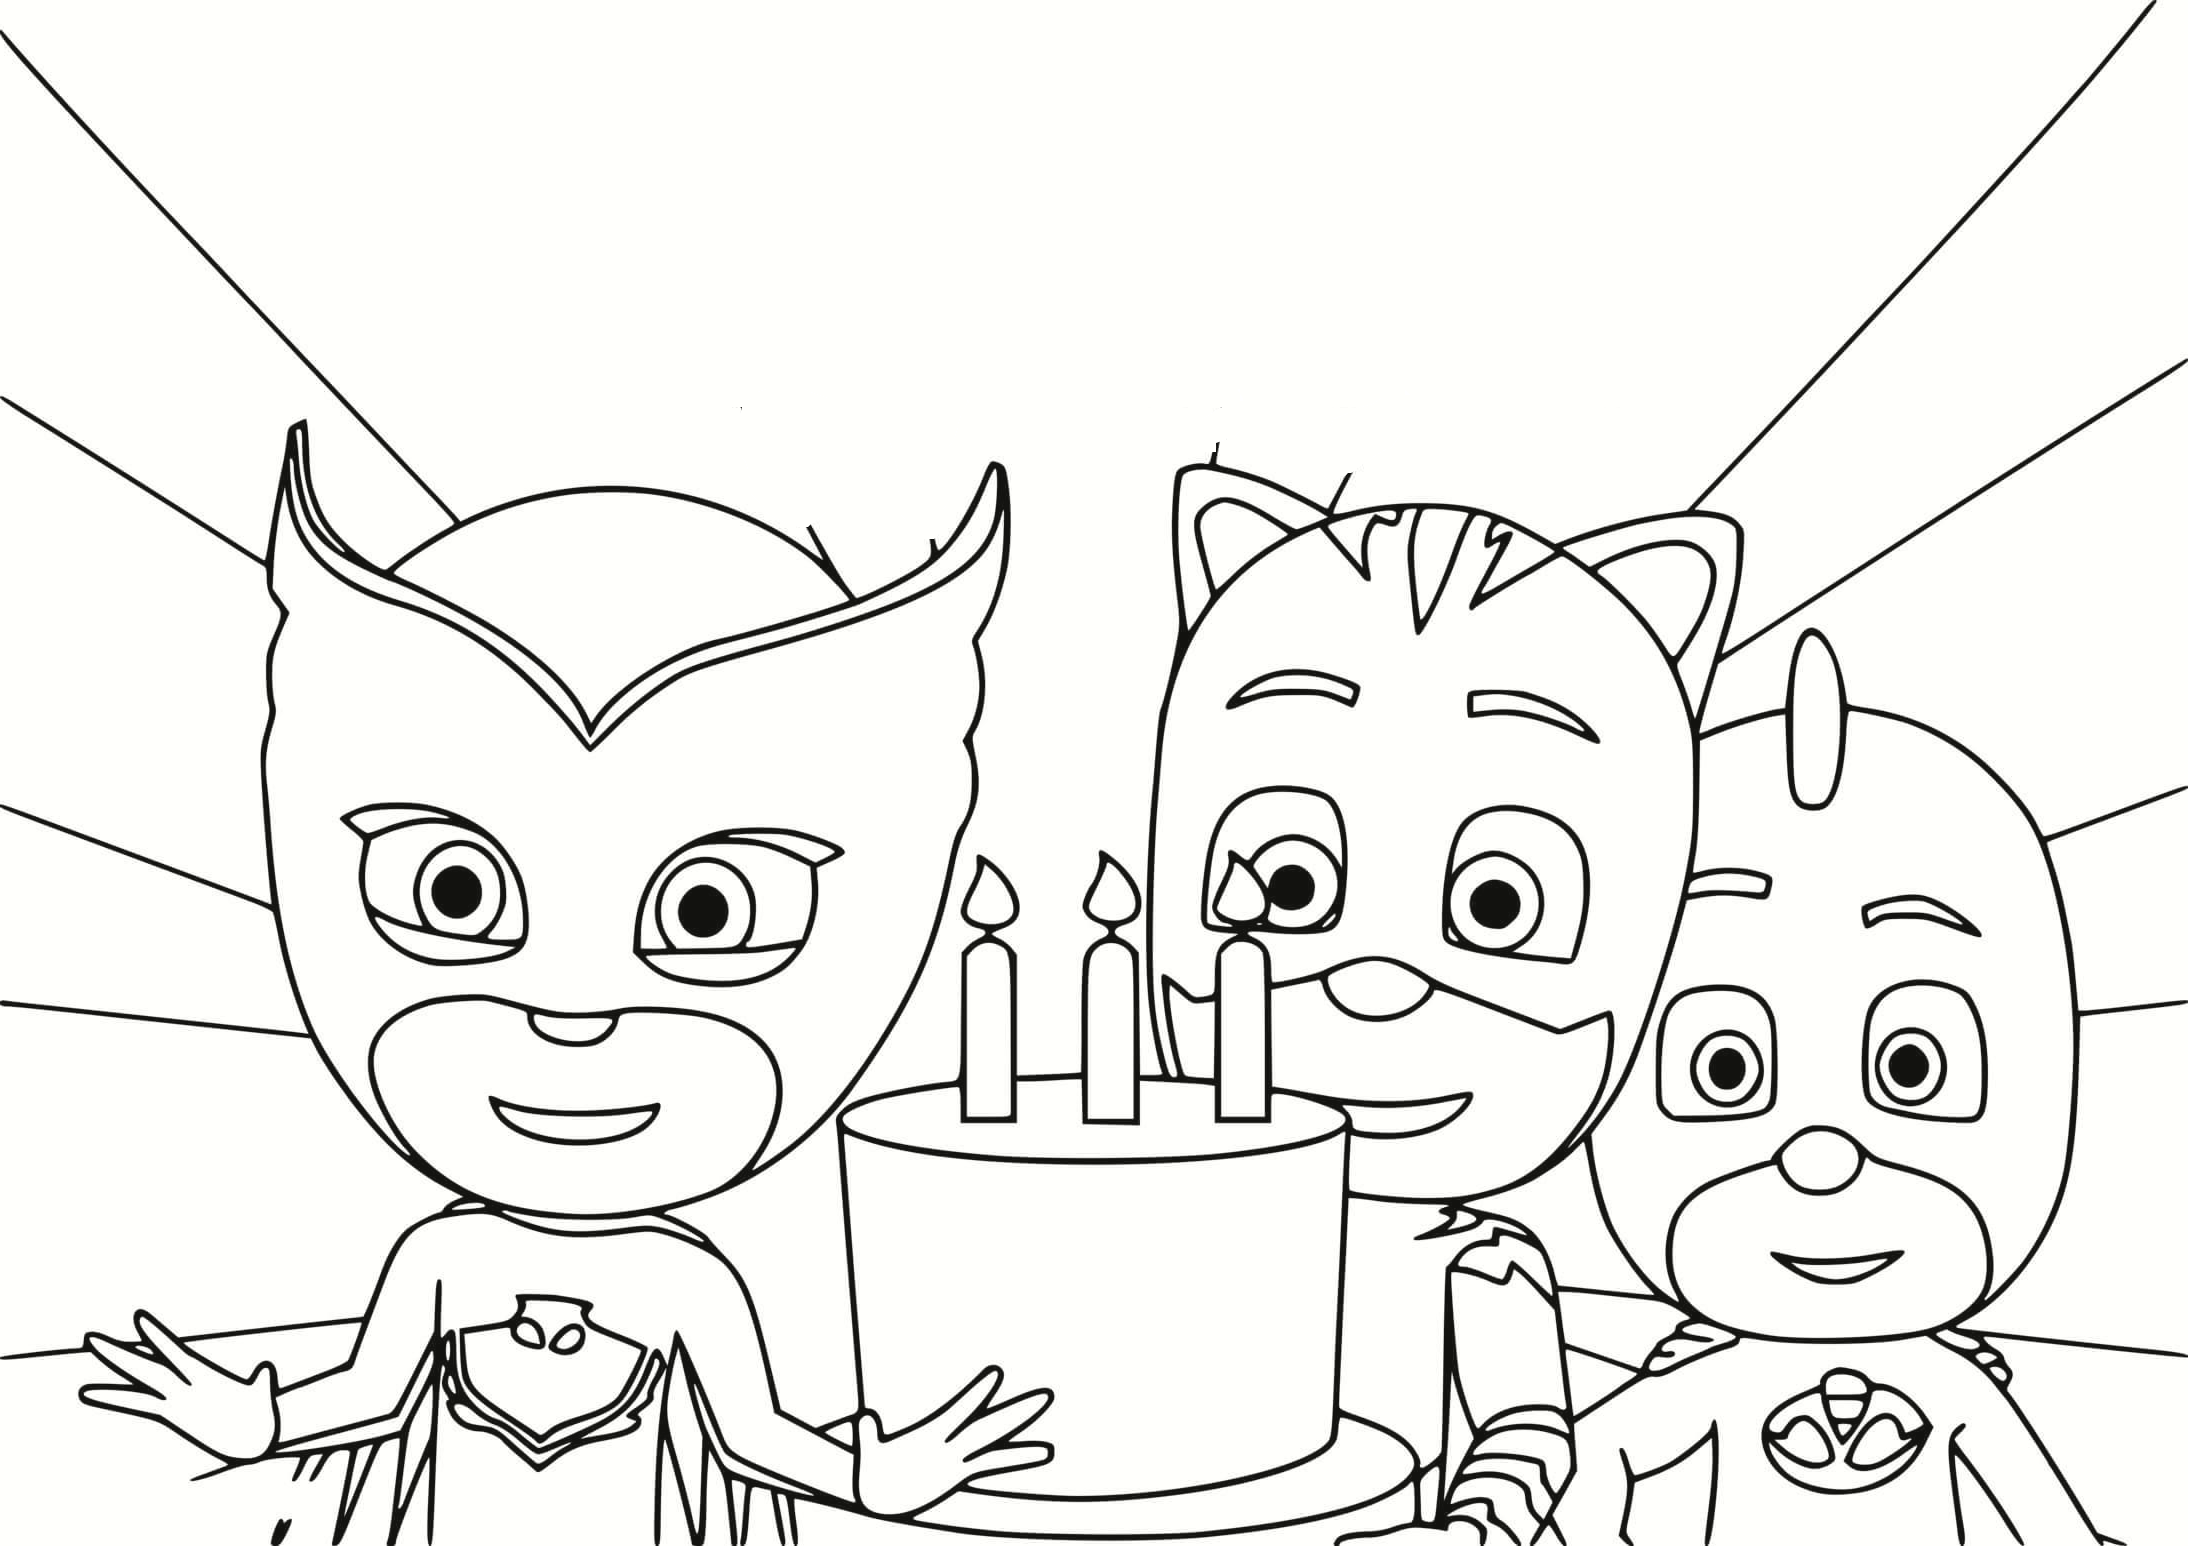 Pj masks birthday coloring page printable